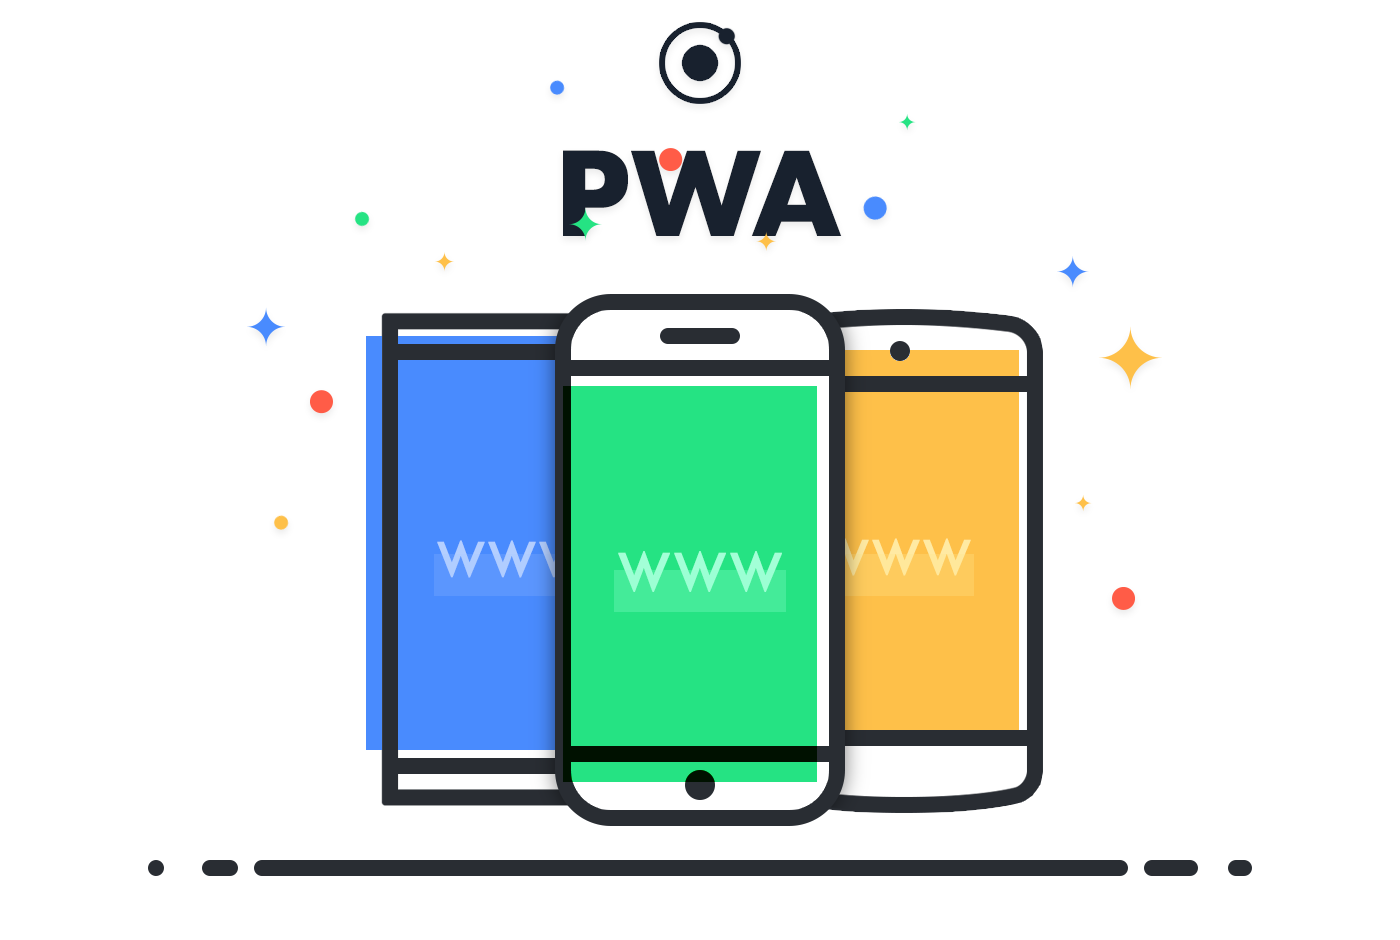 Progressive Web App PWA